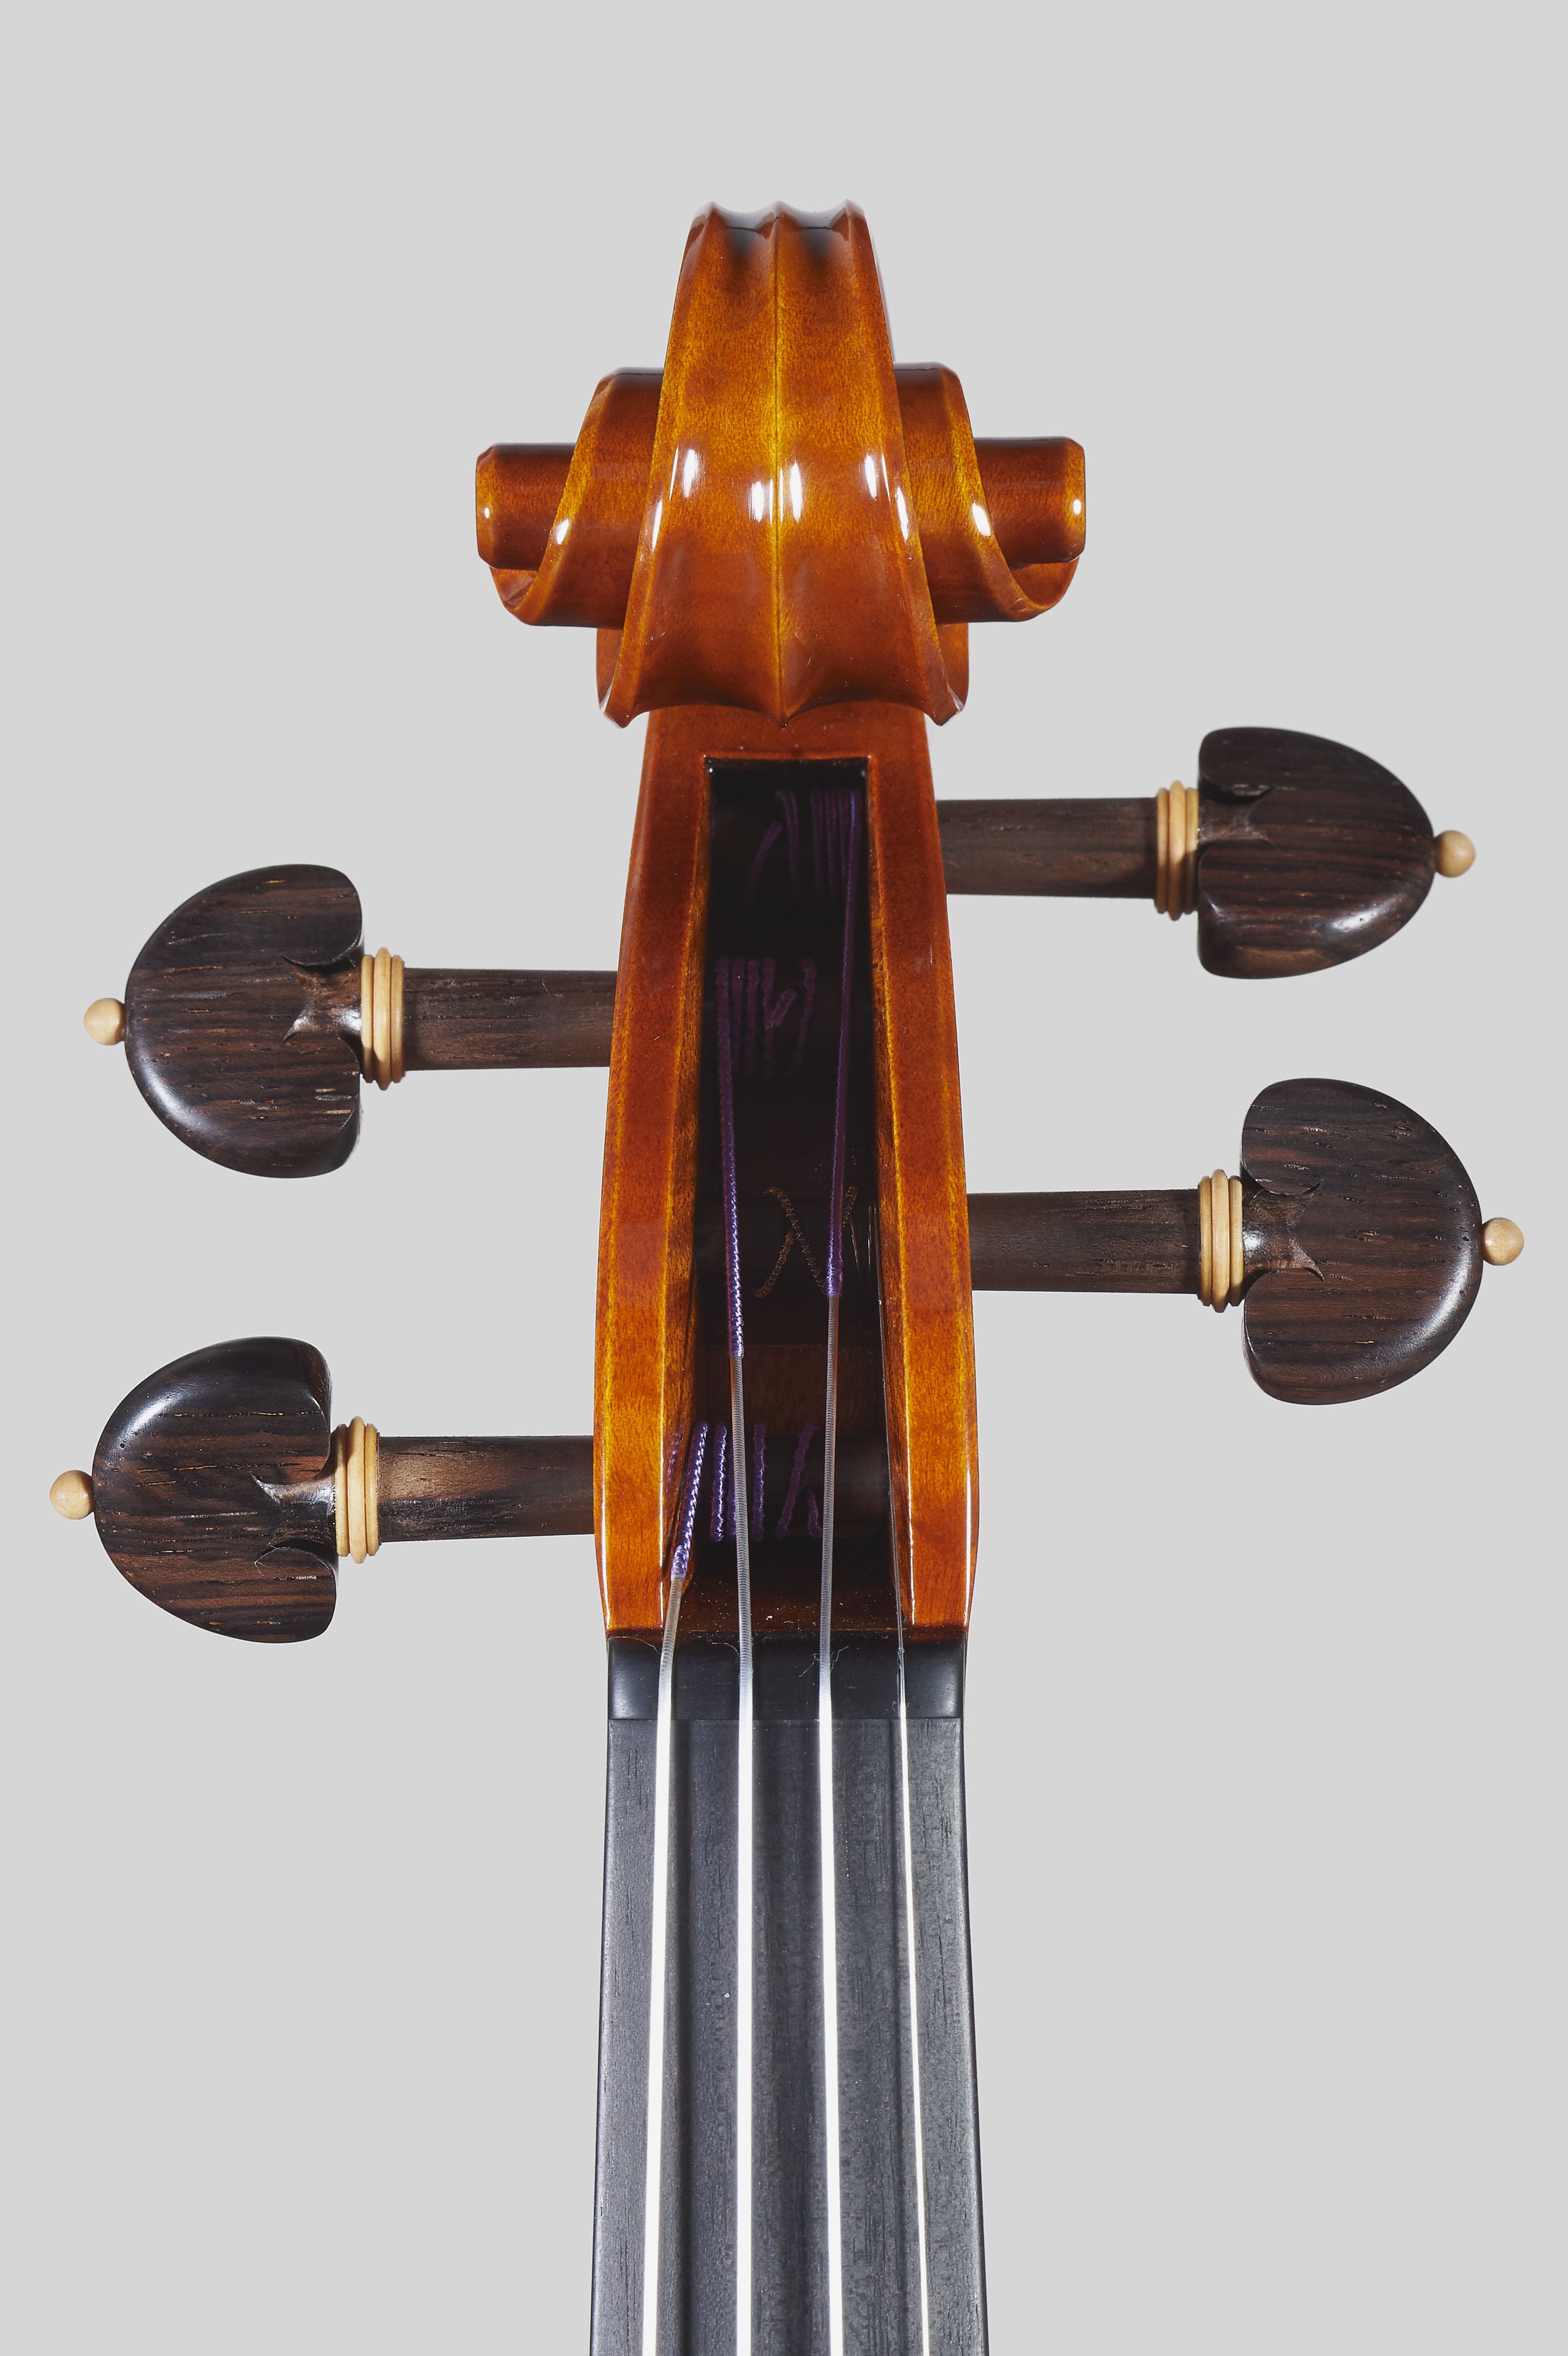 Anno 2018 – Violino modello stile A. Stradivari “Soil” 1714 - Testa fronte